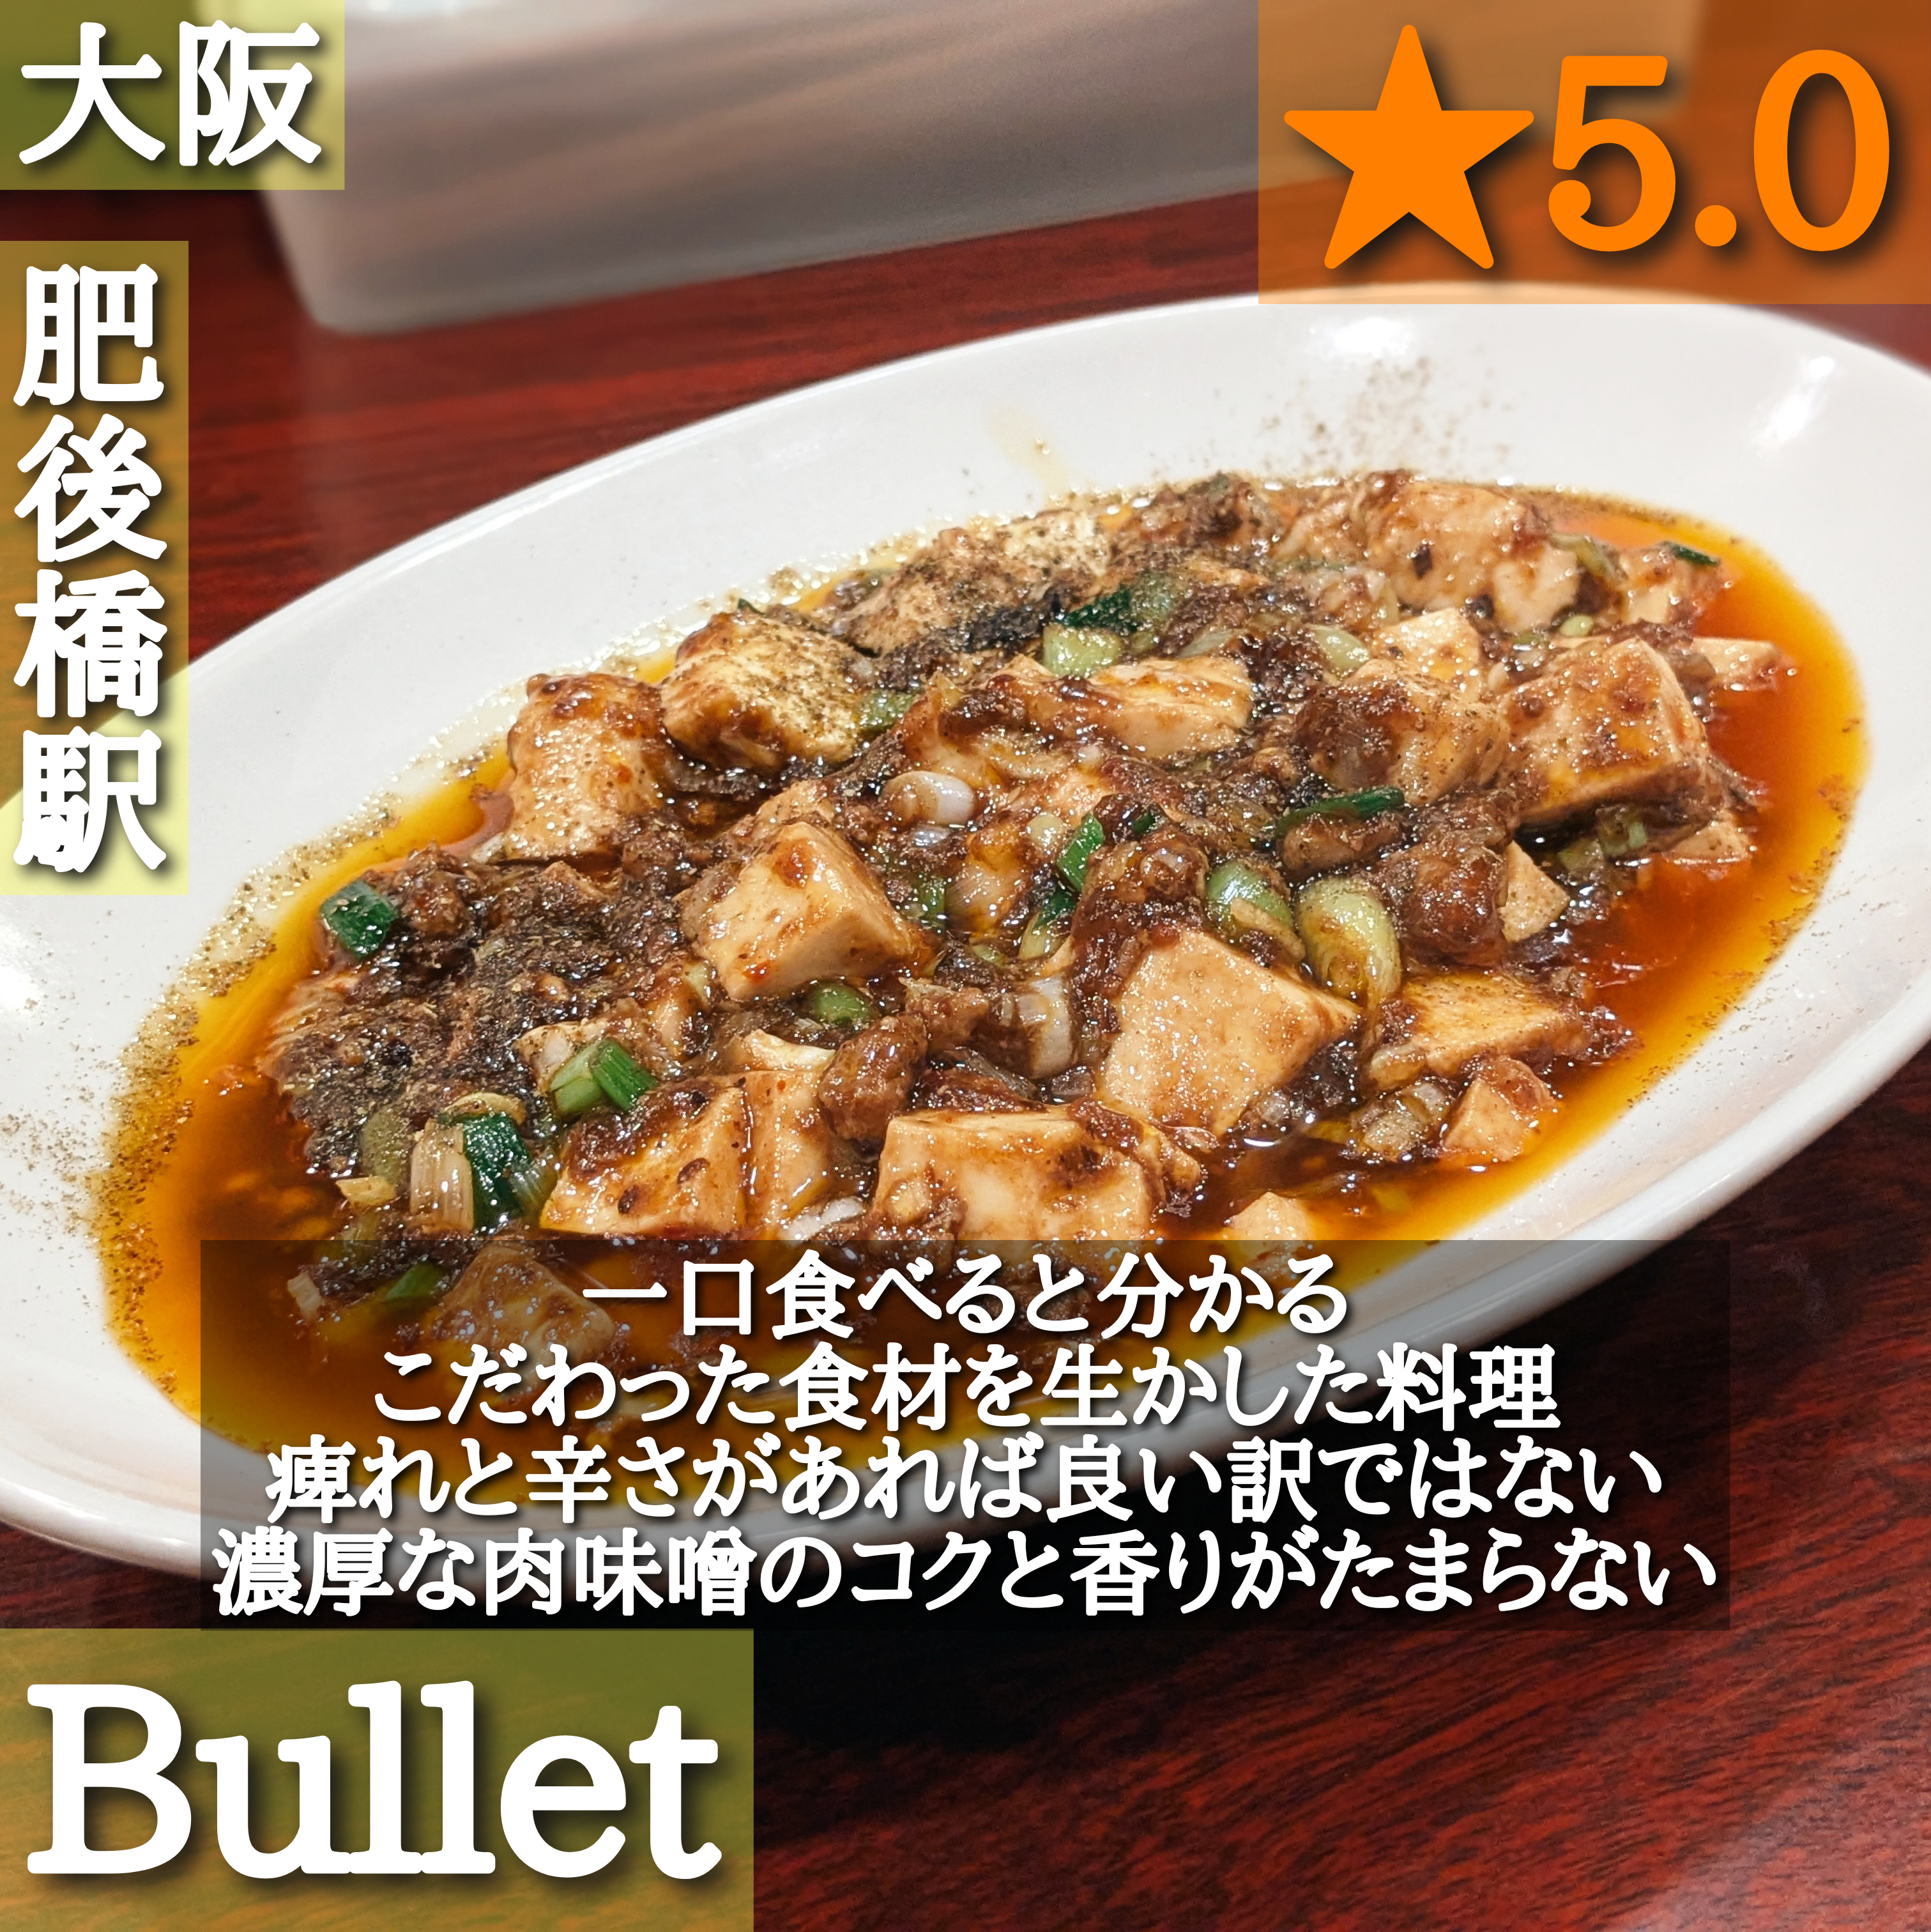 Bullet(肥後橋駅・中華料理)